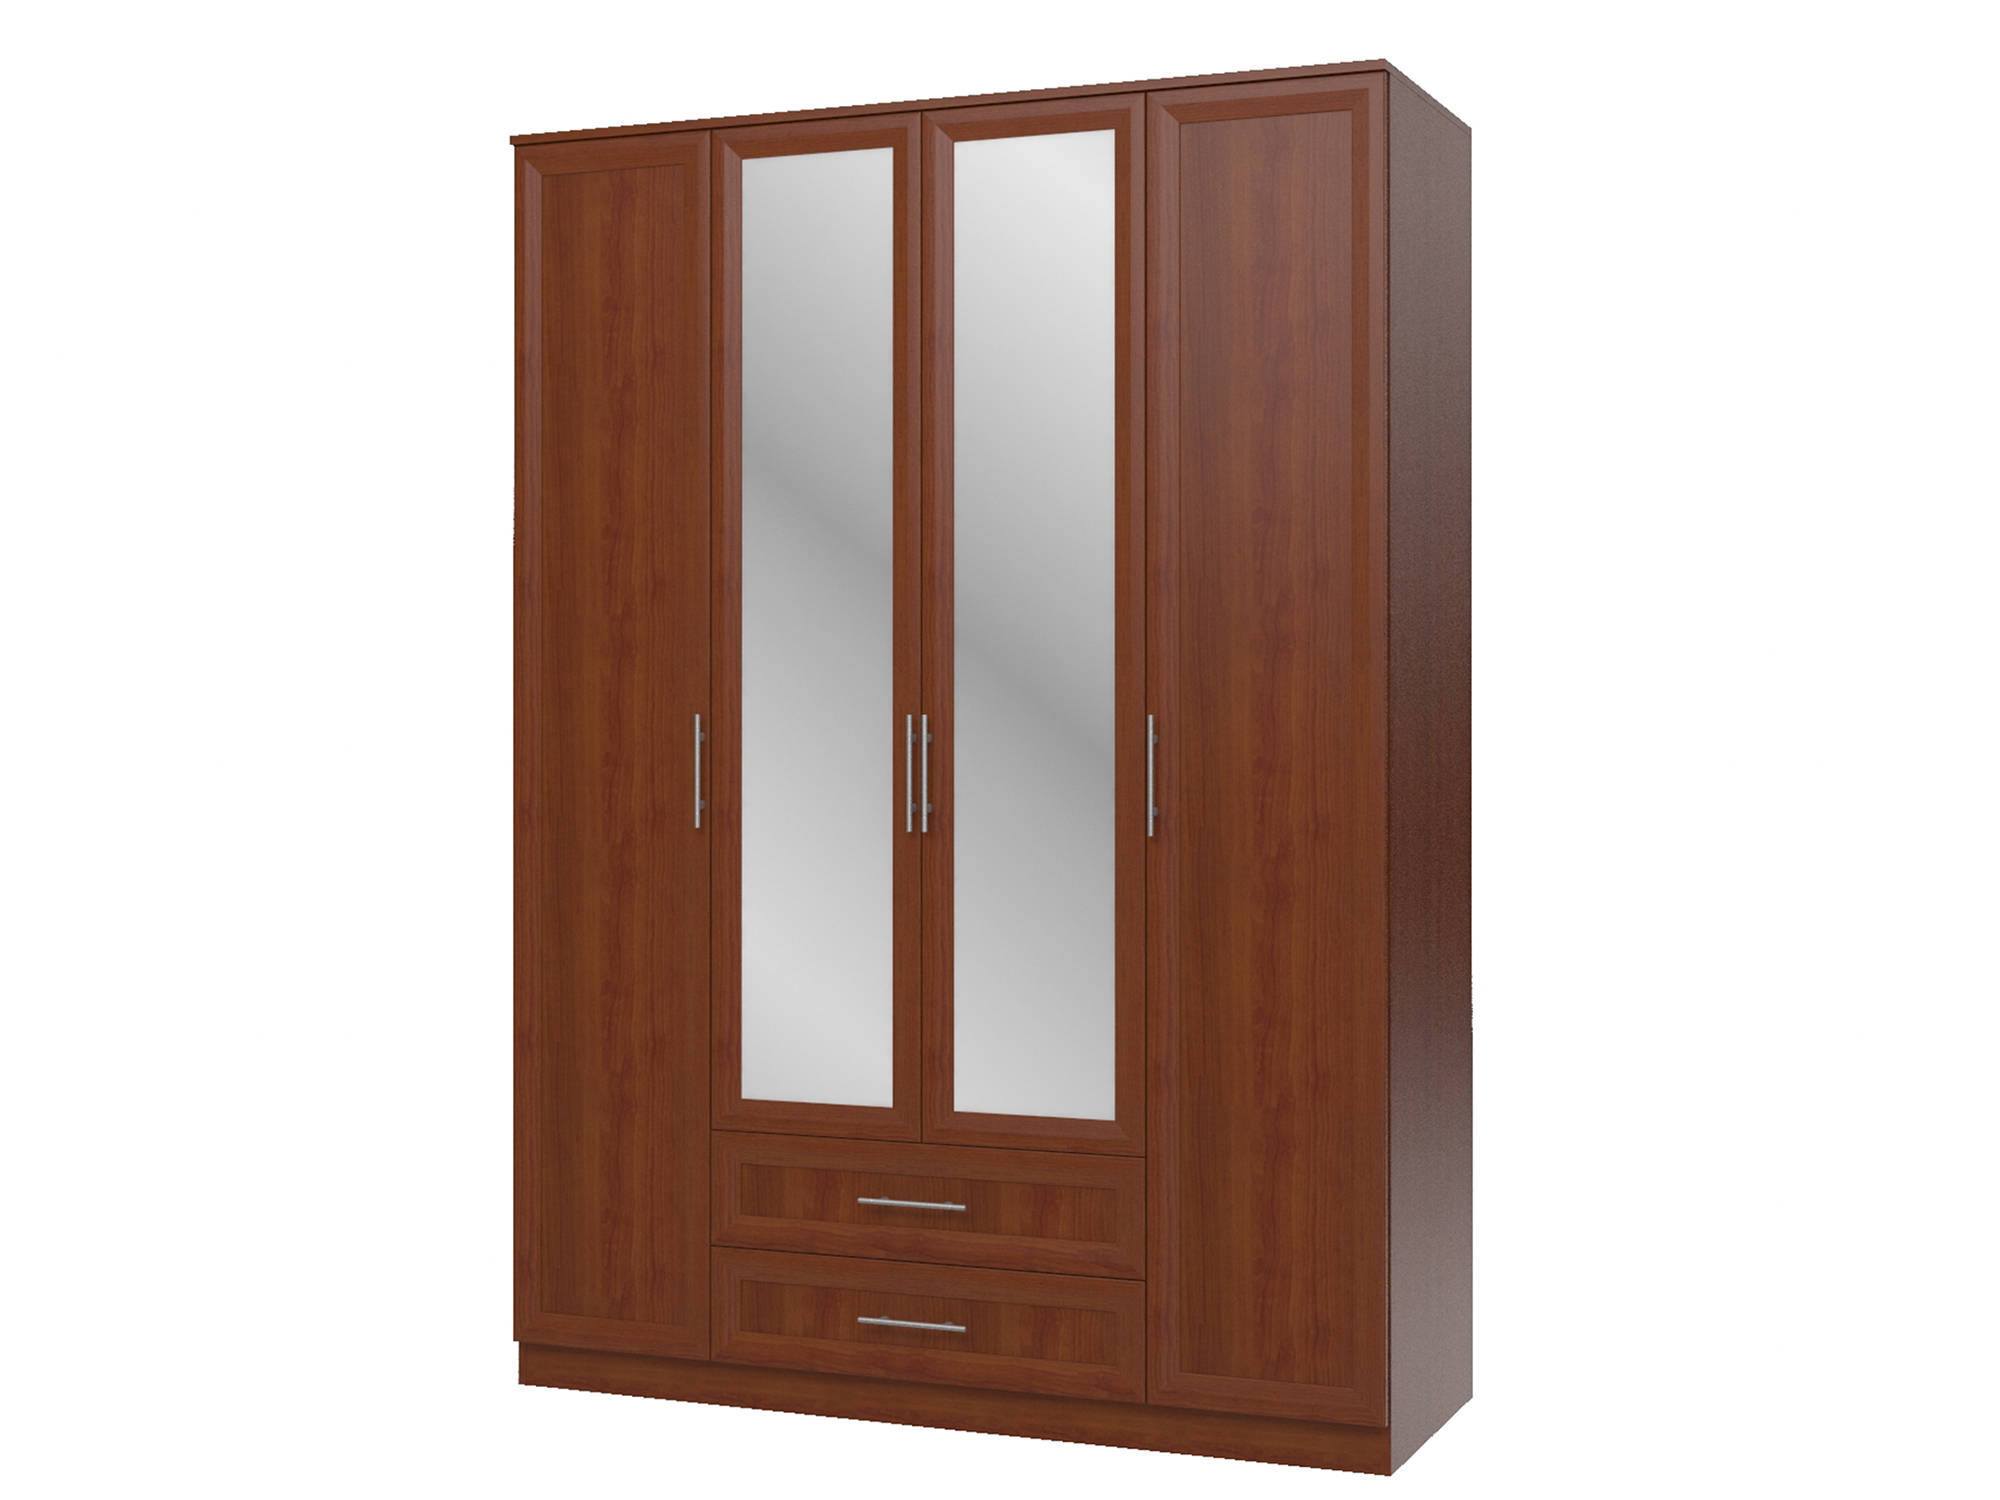 Шкаф 4-х дверный с зеркалами Юлианна Вишня барселона, Коричневый, КДСП, Зеркало шкаф 4х дверный с зеркалами николь сб 2595 1 белый